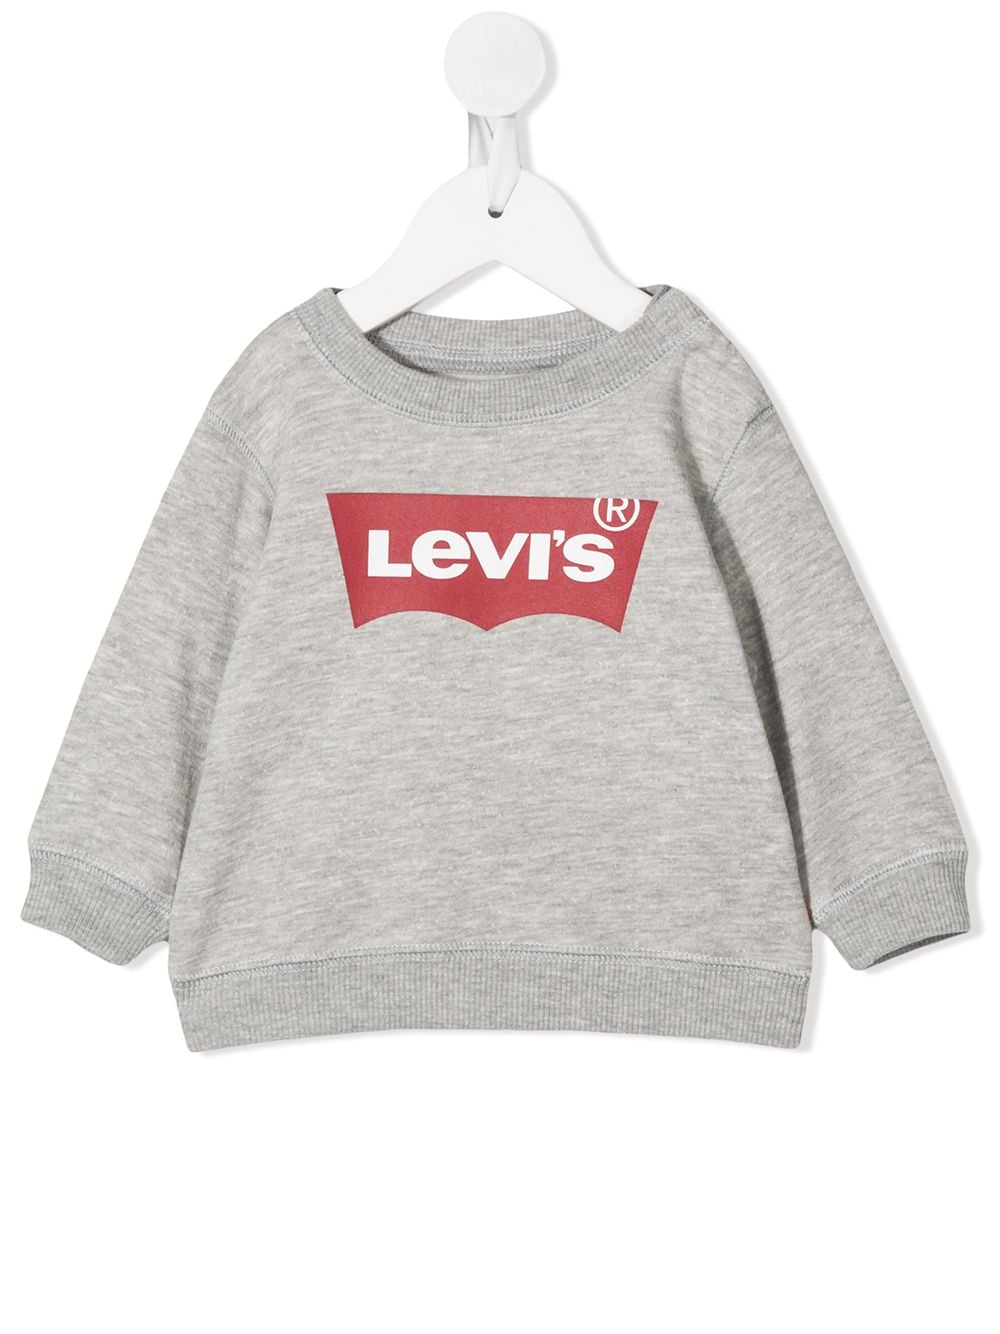 Levi's Kids batwing logo sweater - Grey von Levi's Kids